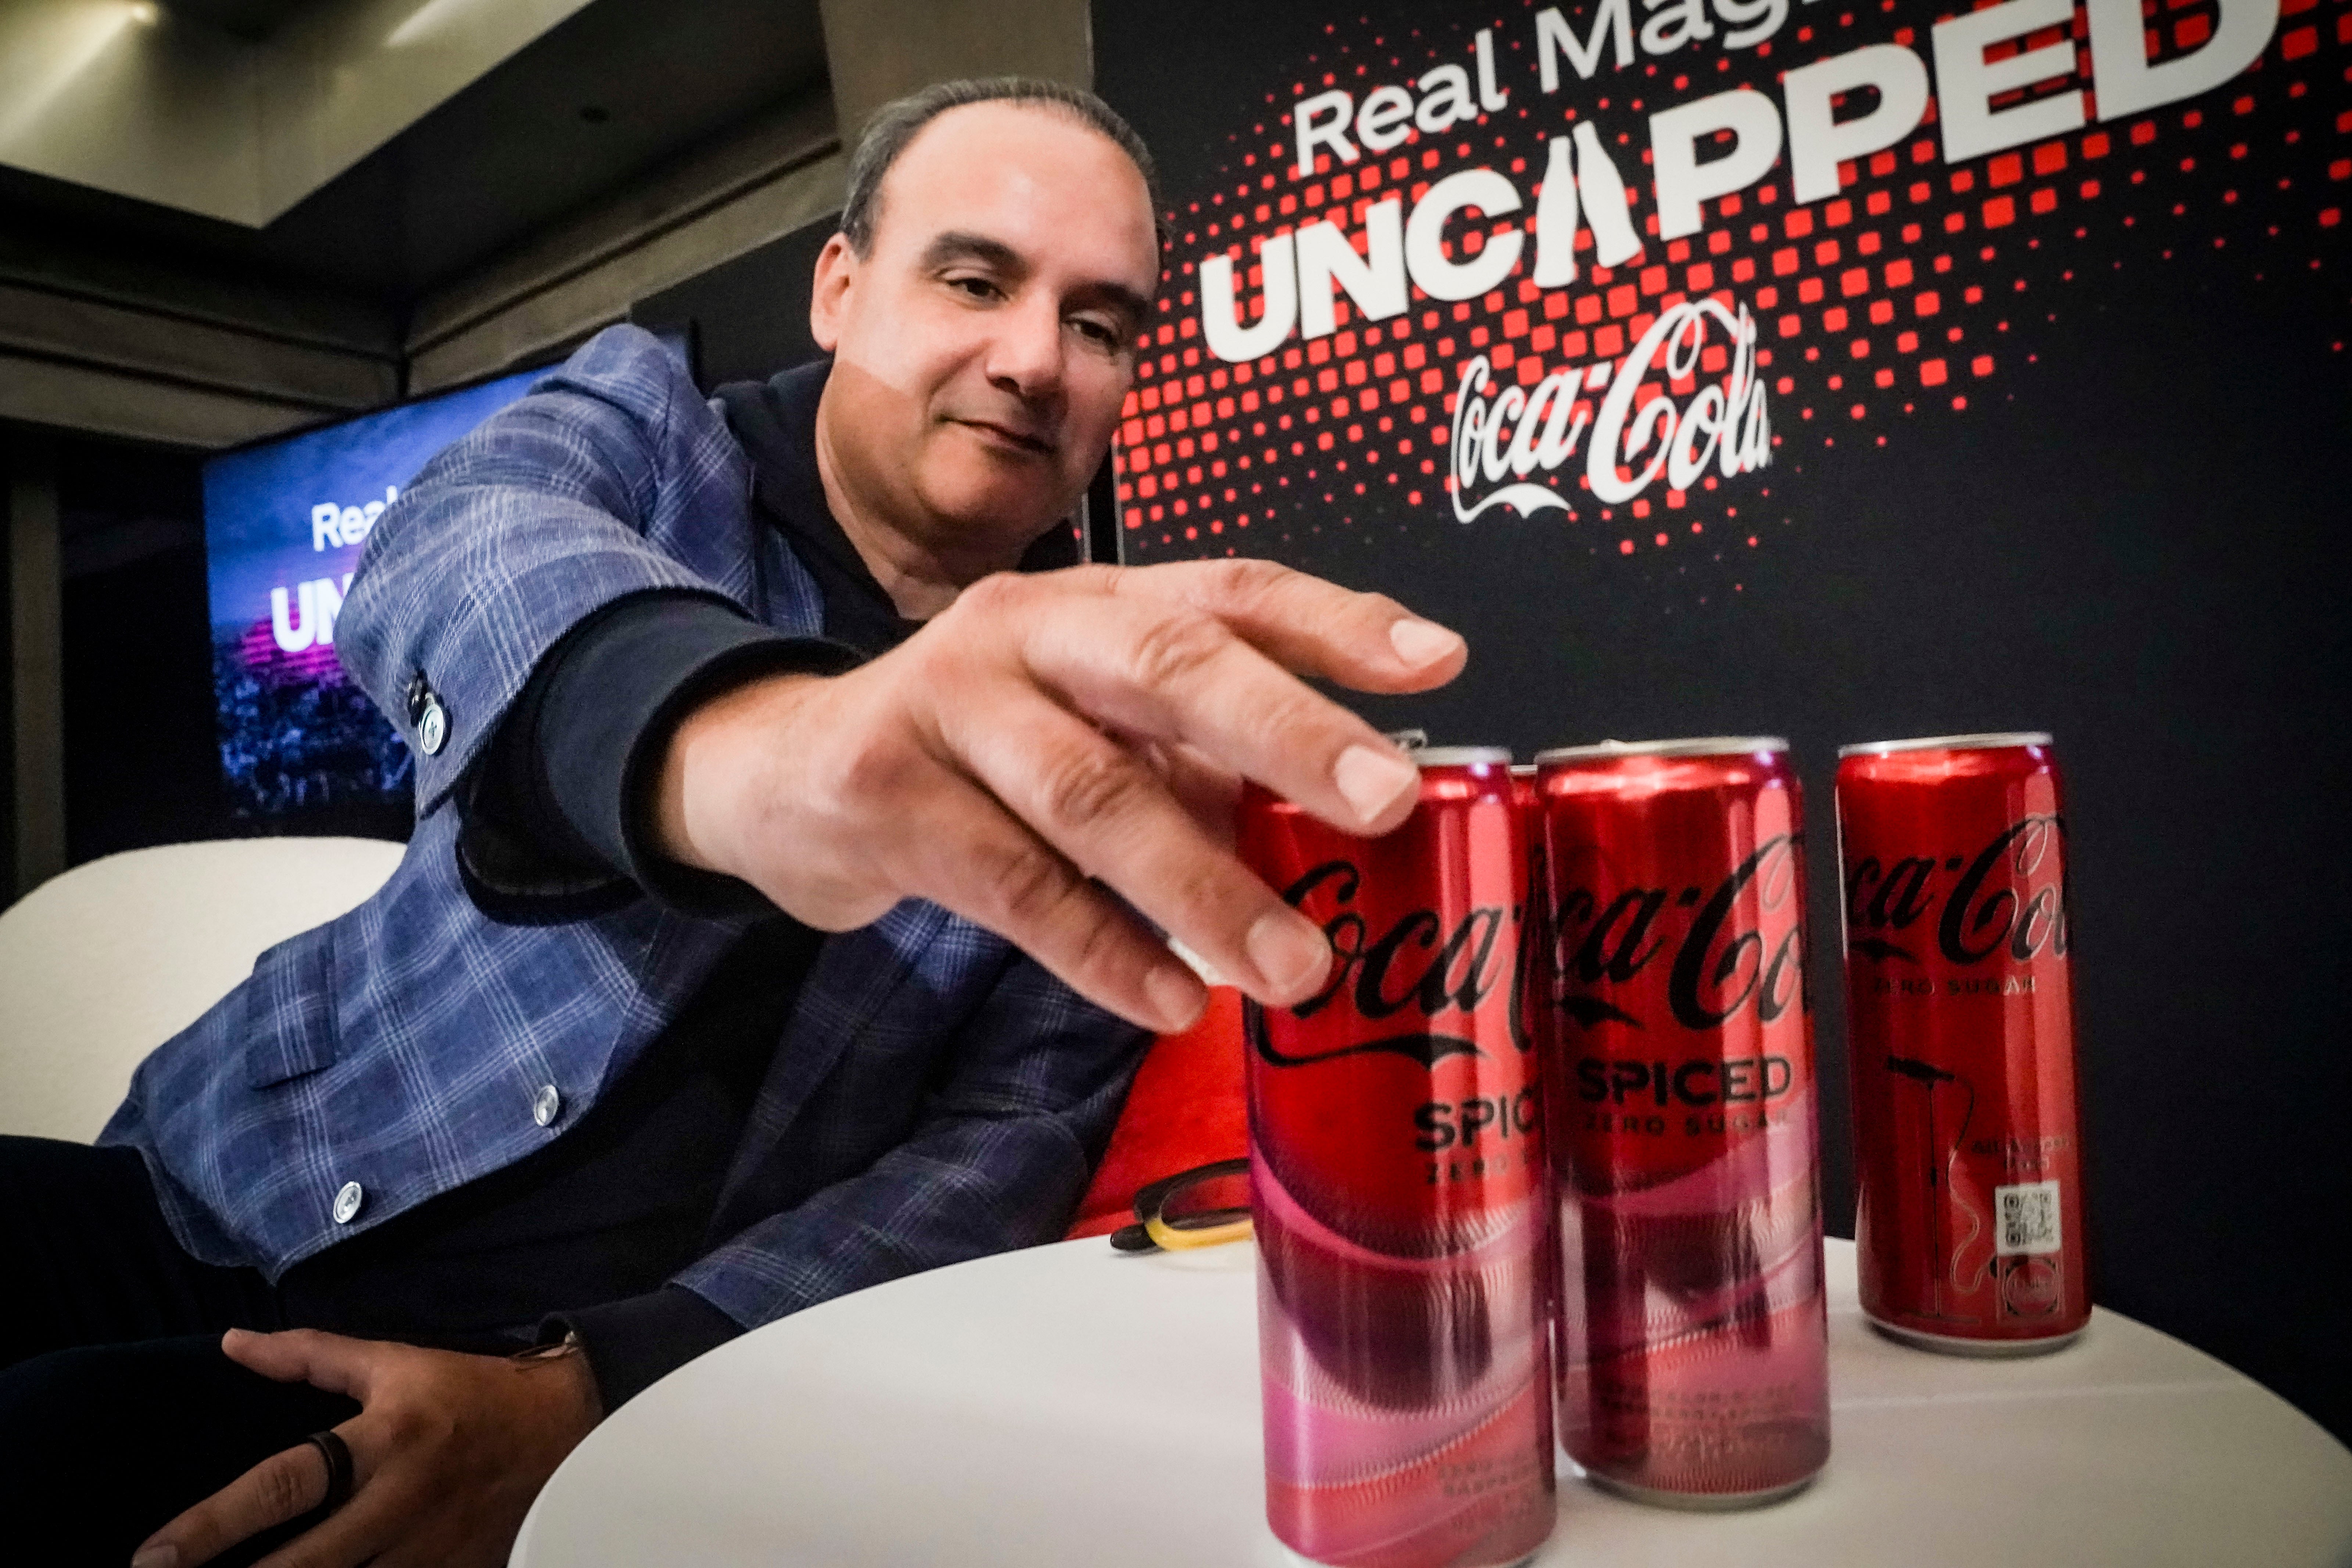 Selman Careaga, president of Coca-Cola’s Global Category, reaches for Coca-Cola Spiced